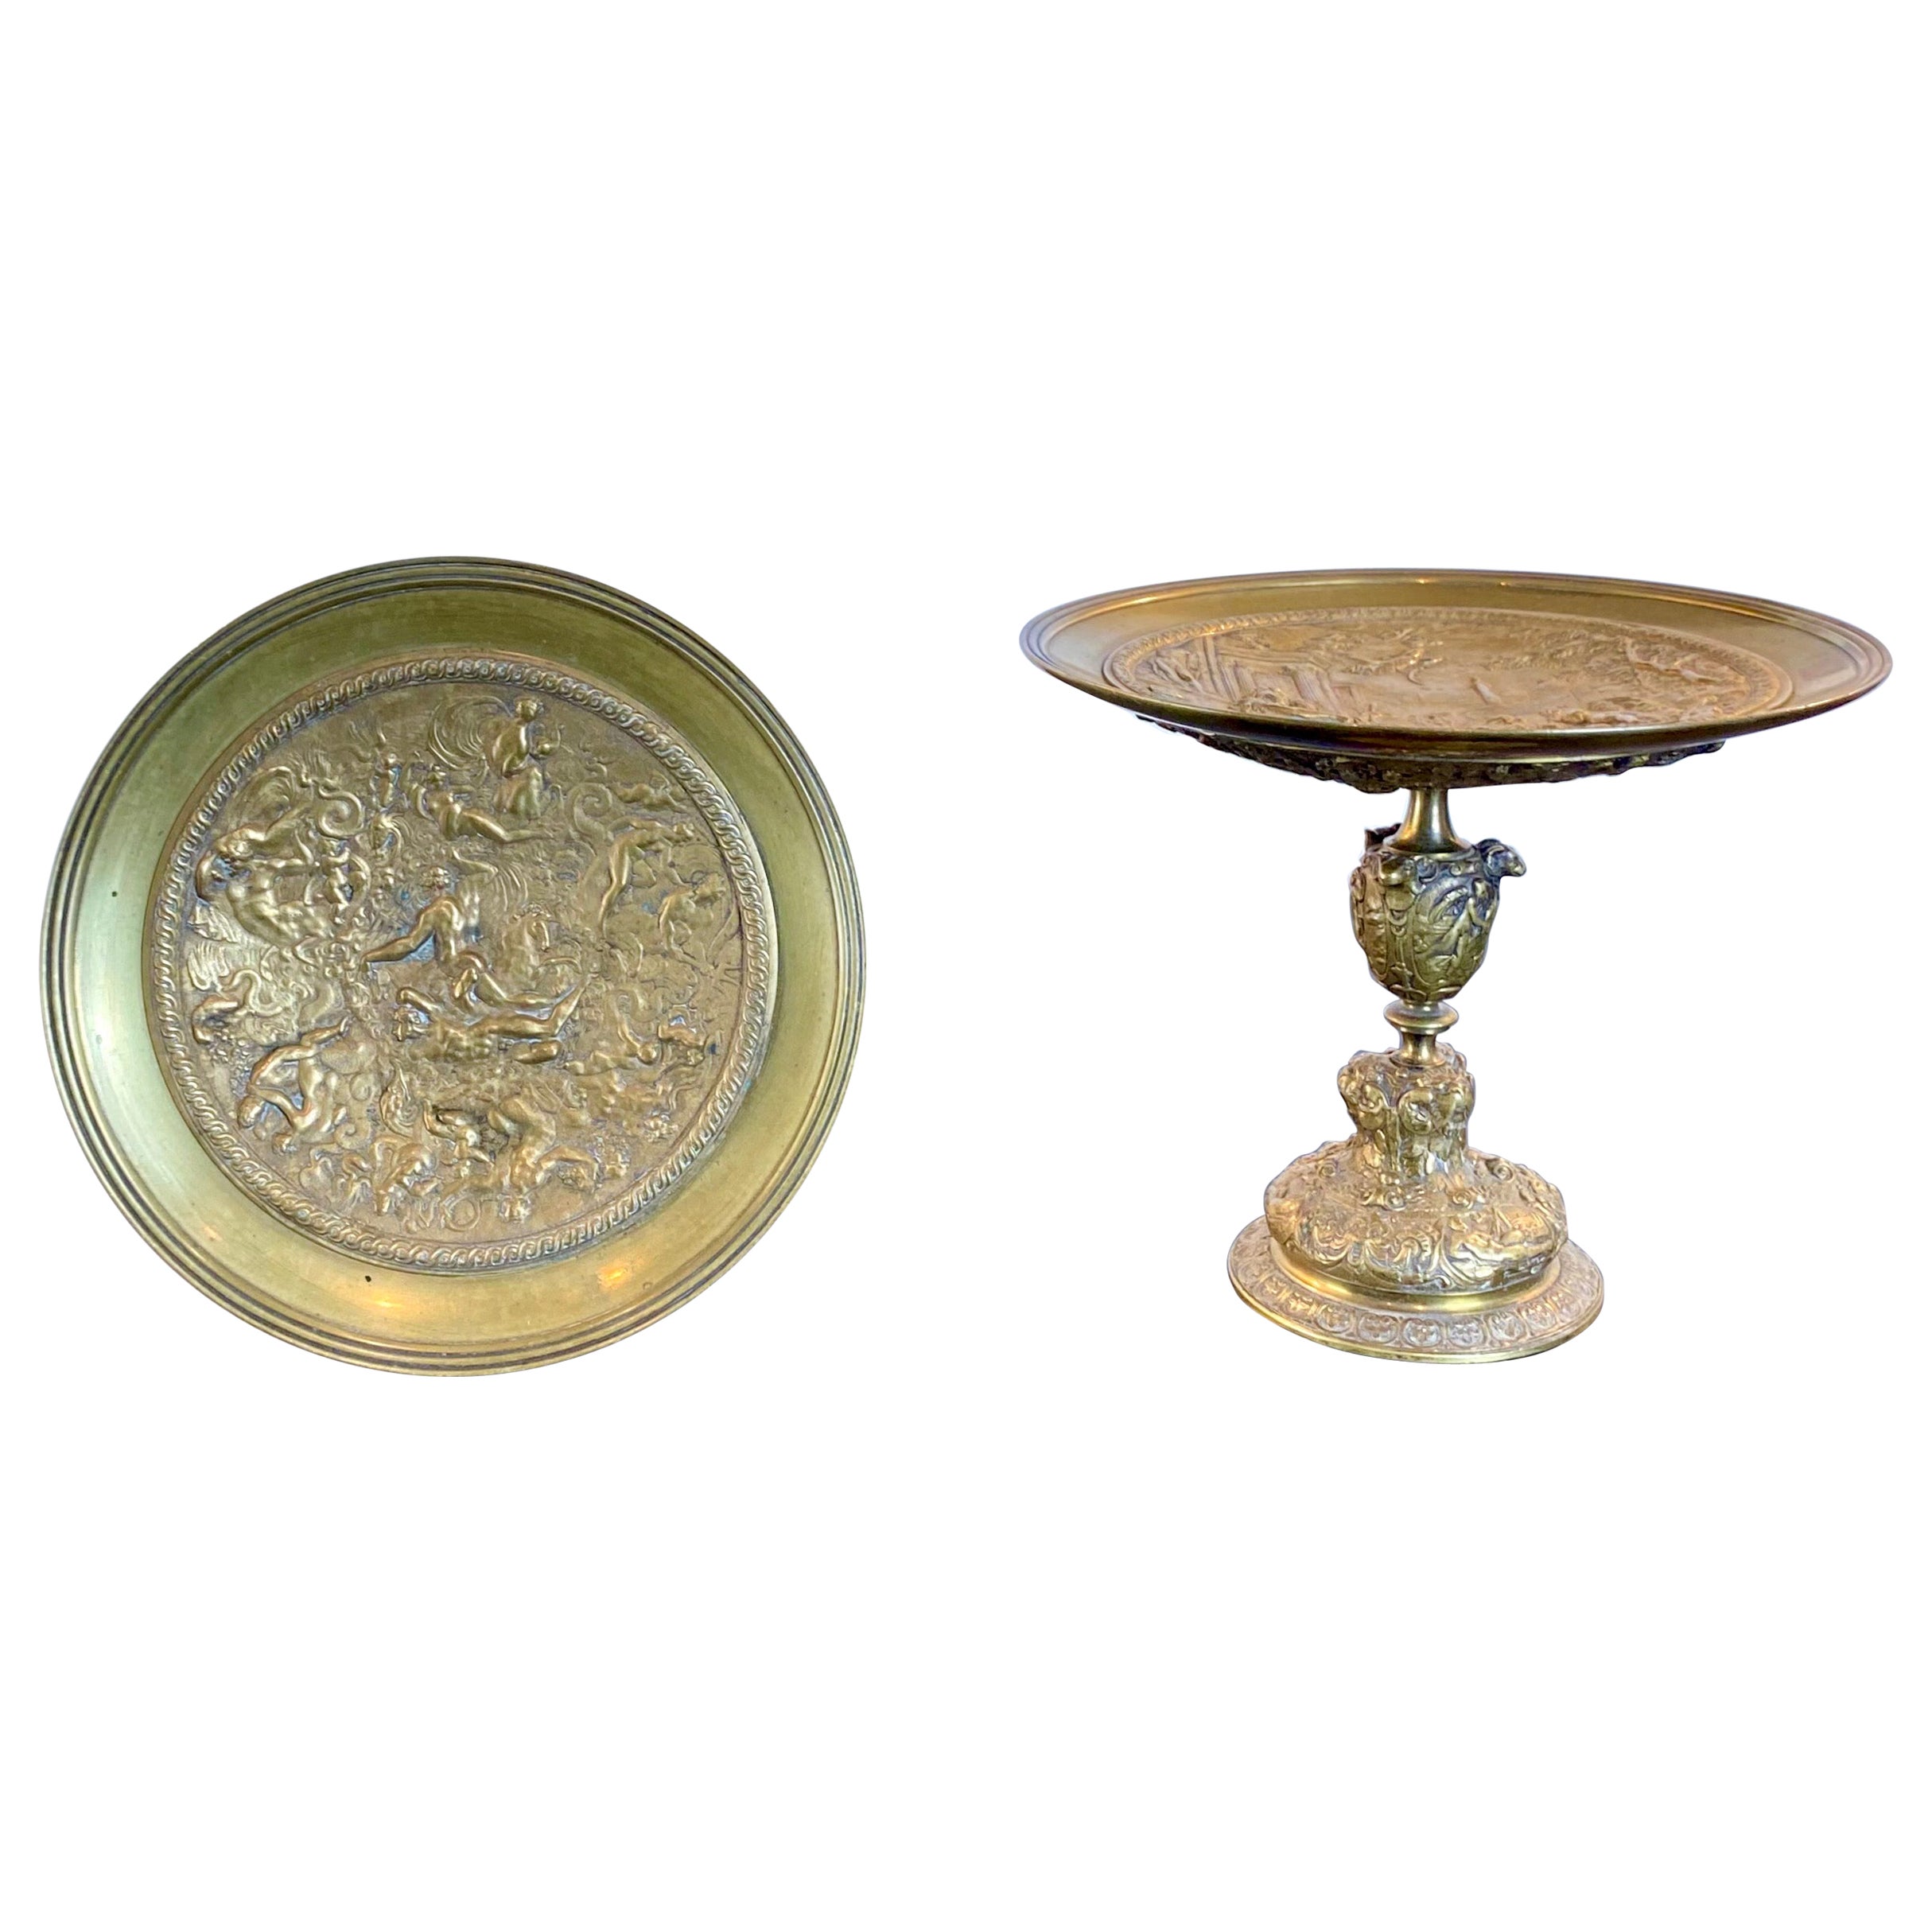 Tazza Neo-Renaissance, Paar Tazza-Dekoschalen aus vergoldeter Bronze, antik, 19. Jahrhundert